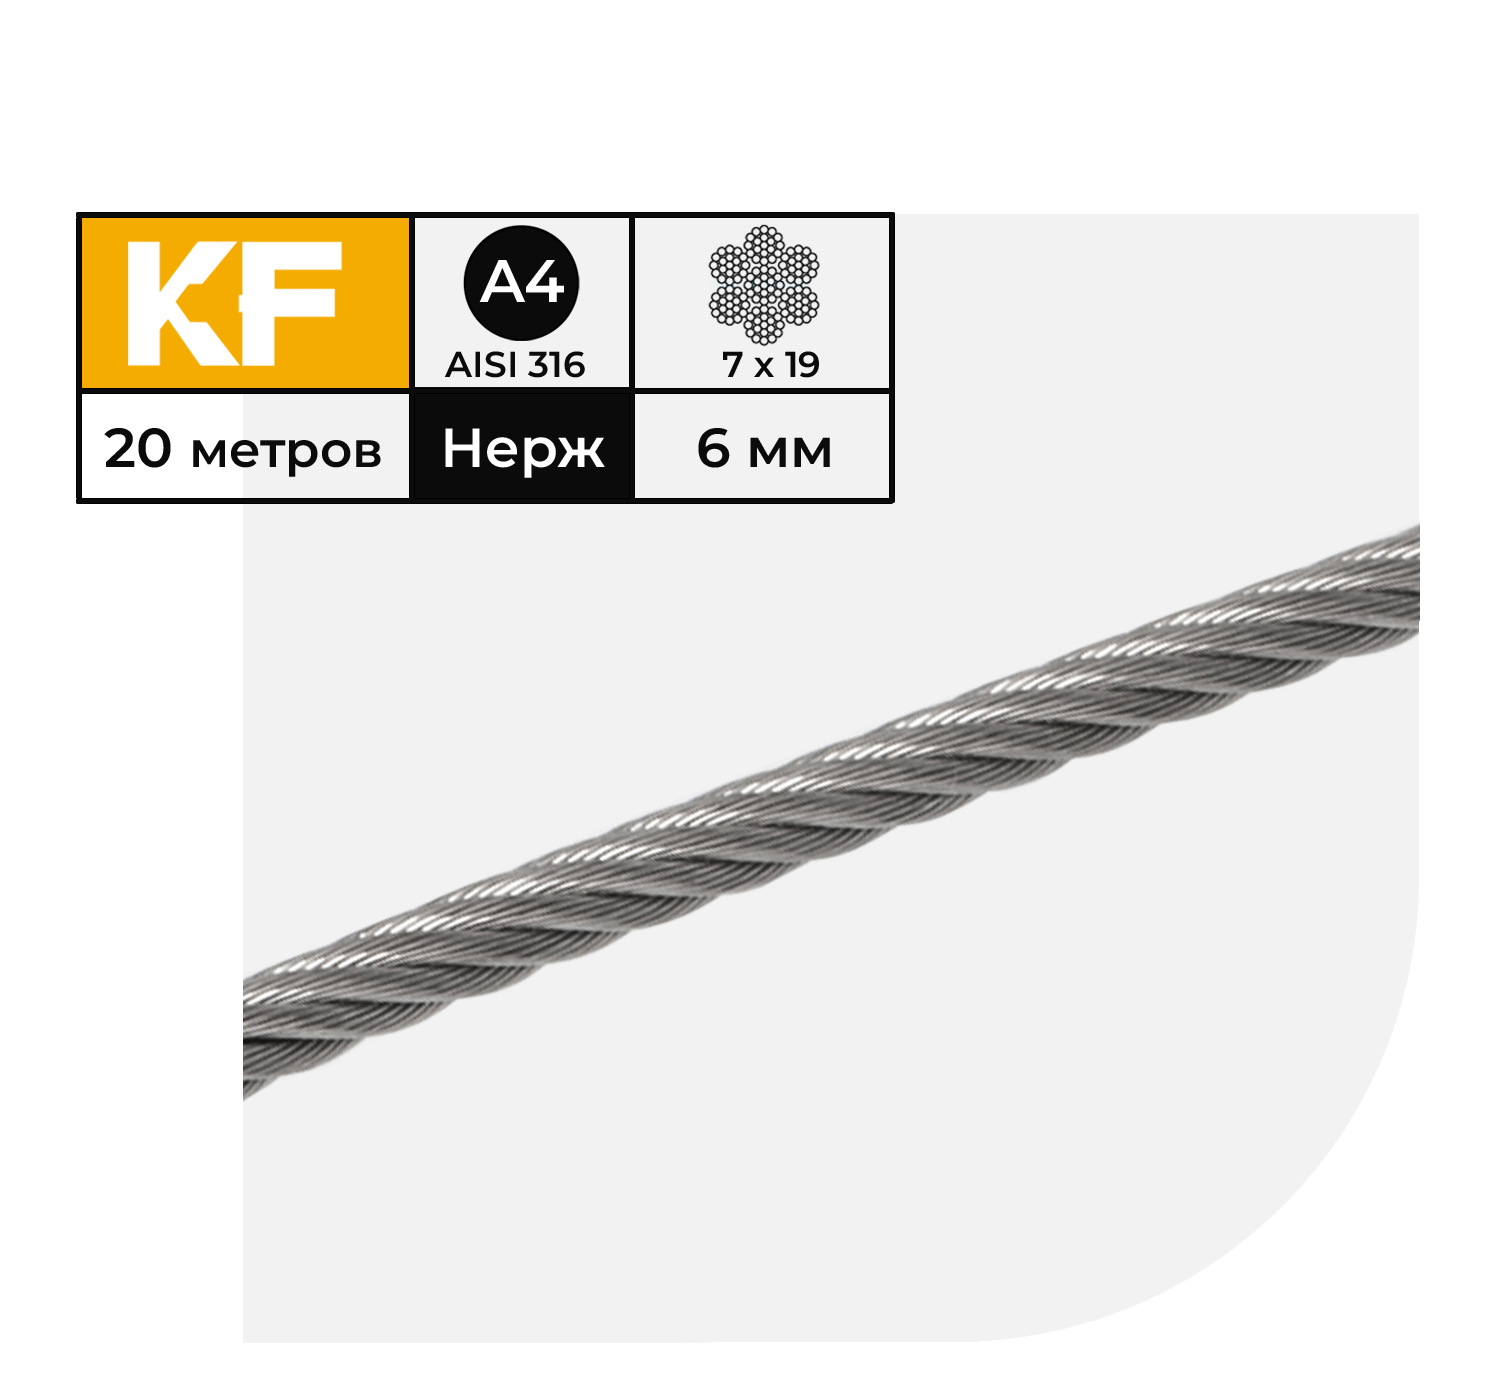 Трос нержавеющий KREPFIELD 6 мм сталь А4 плетение 7х19 мягкий 20 метров